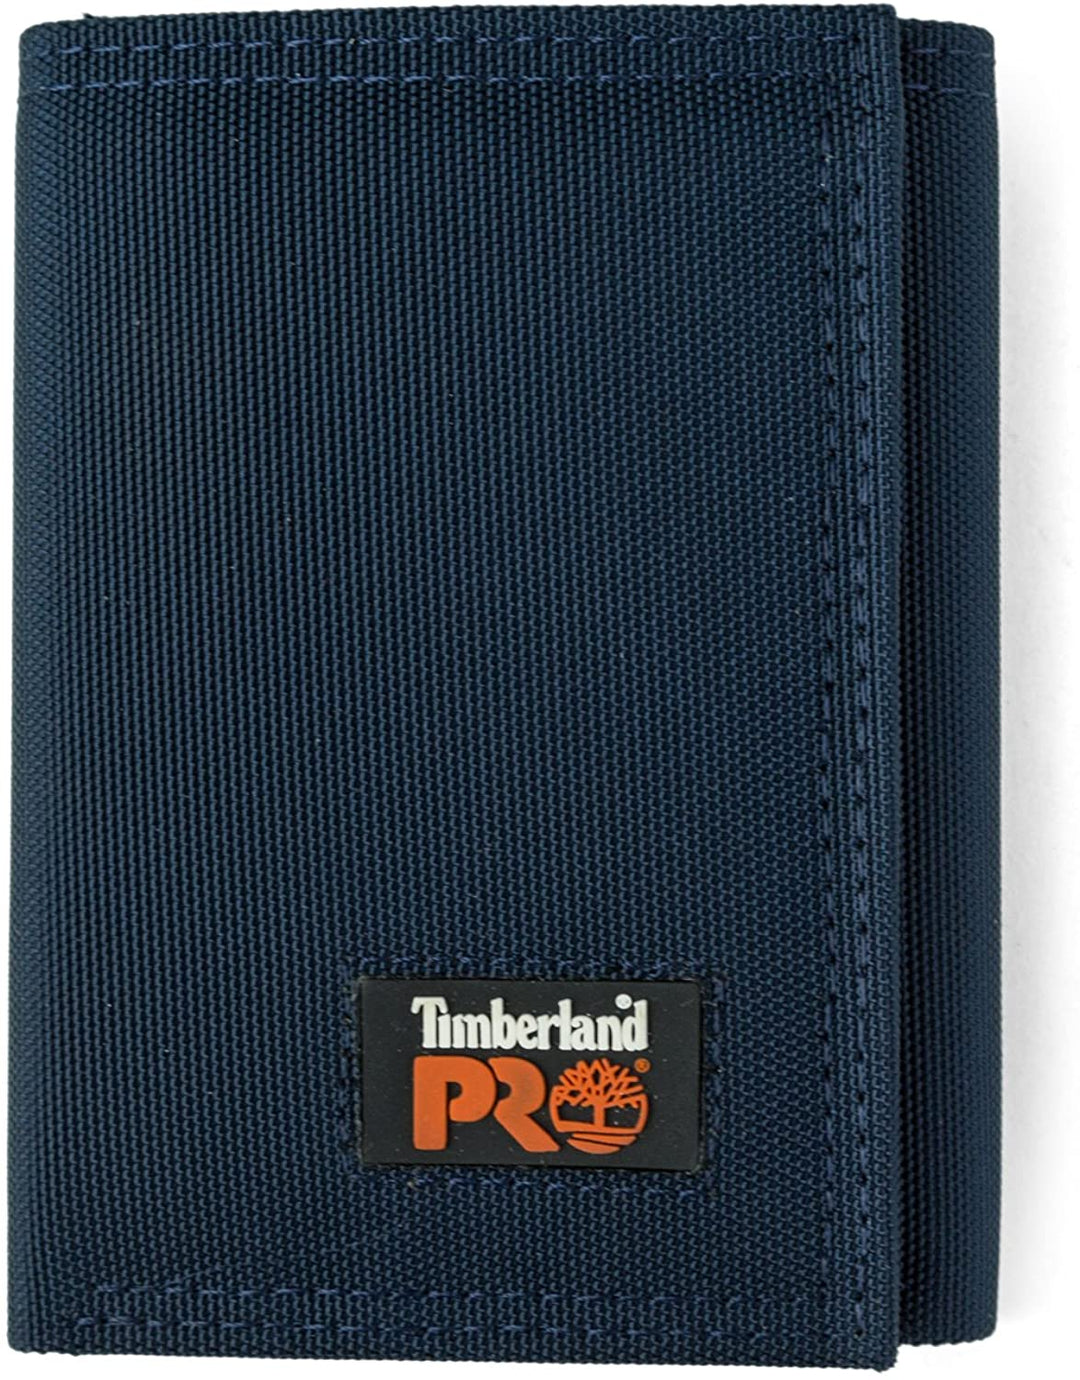 Timberland PRO Men's Cordura Nylon RFID Trifold Wallet DP0033/23 with ID Window Navy - 3alababak